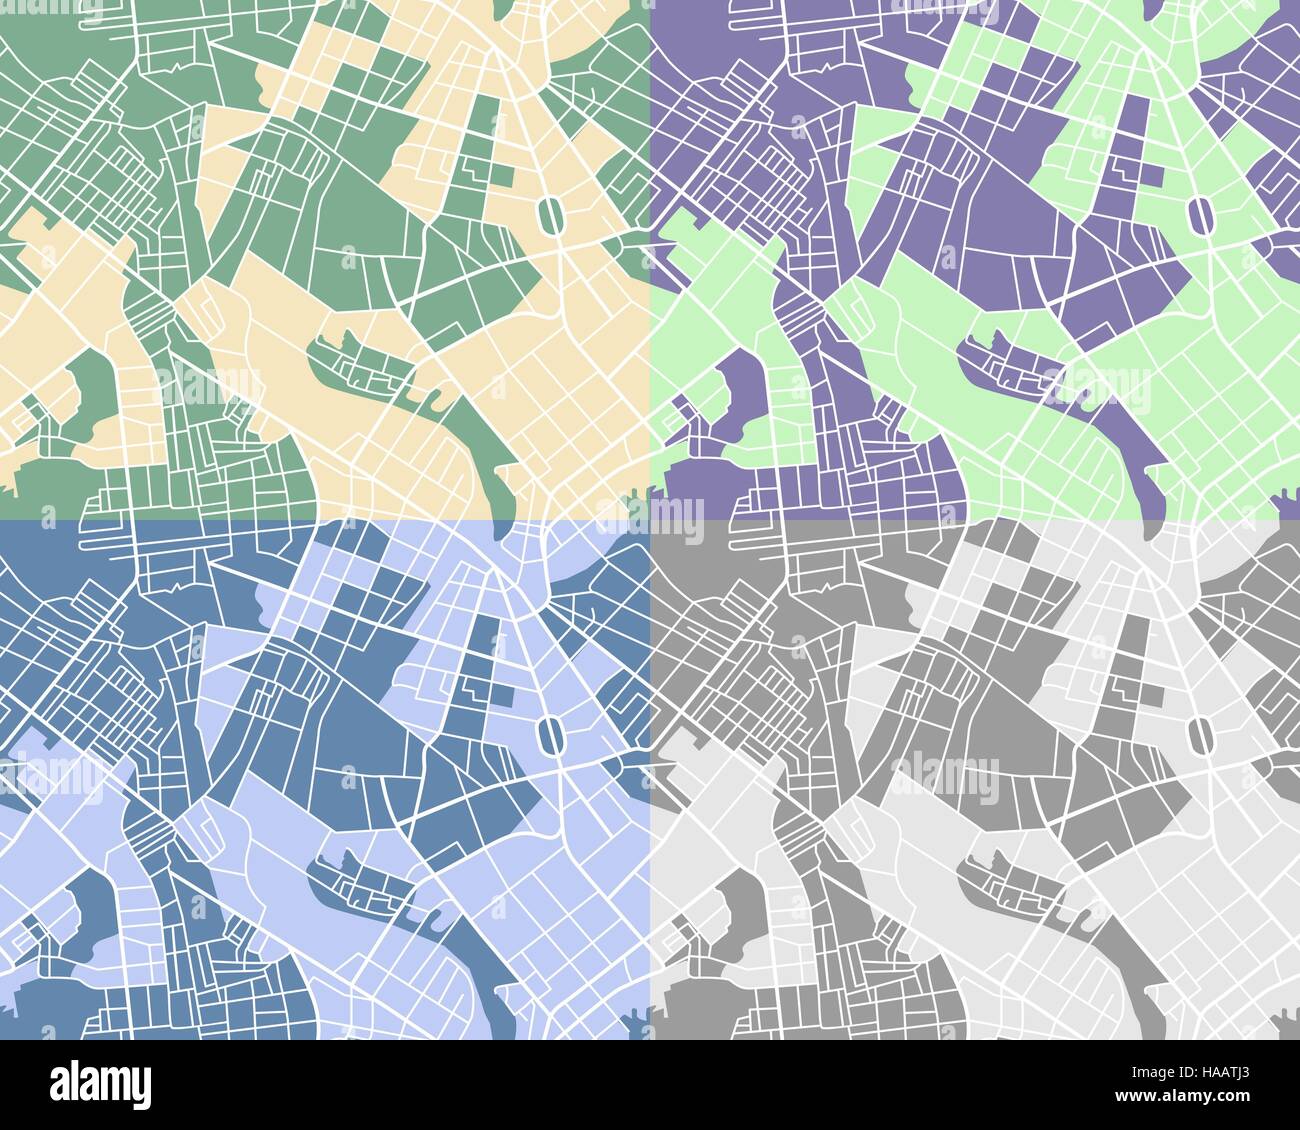 Set of city maps Stock Vector